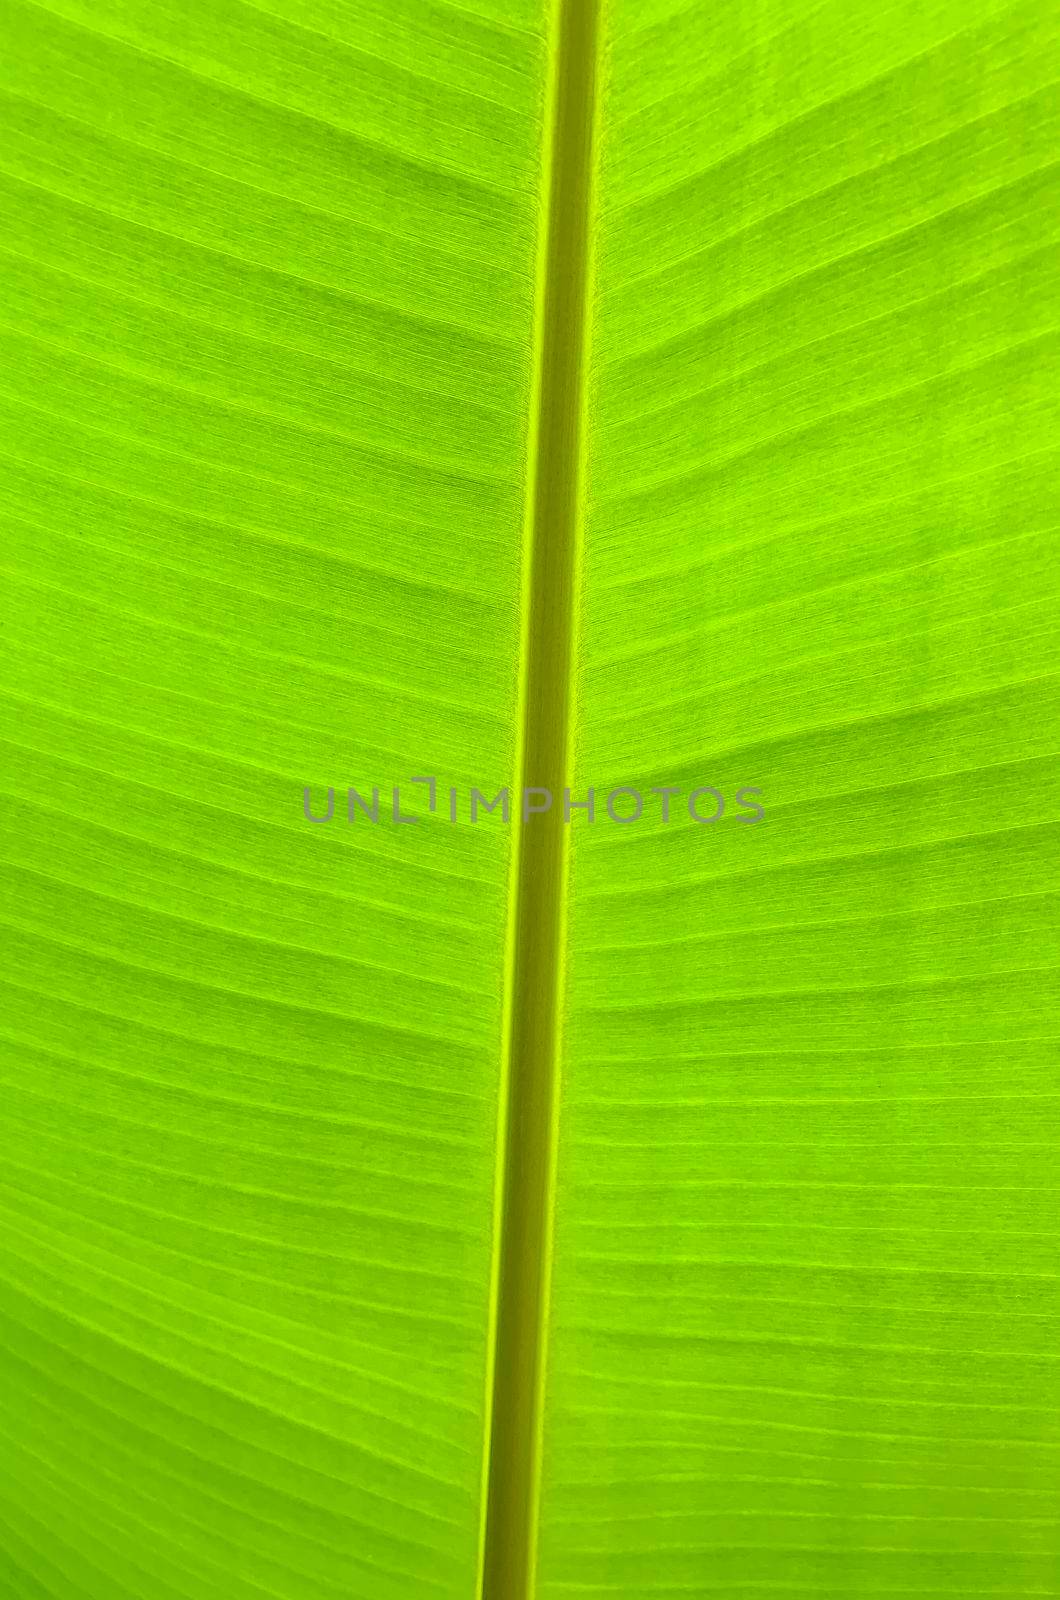 Green tropical palm leaf background. Studio Photo.